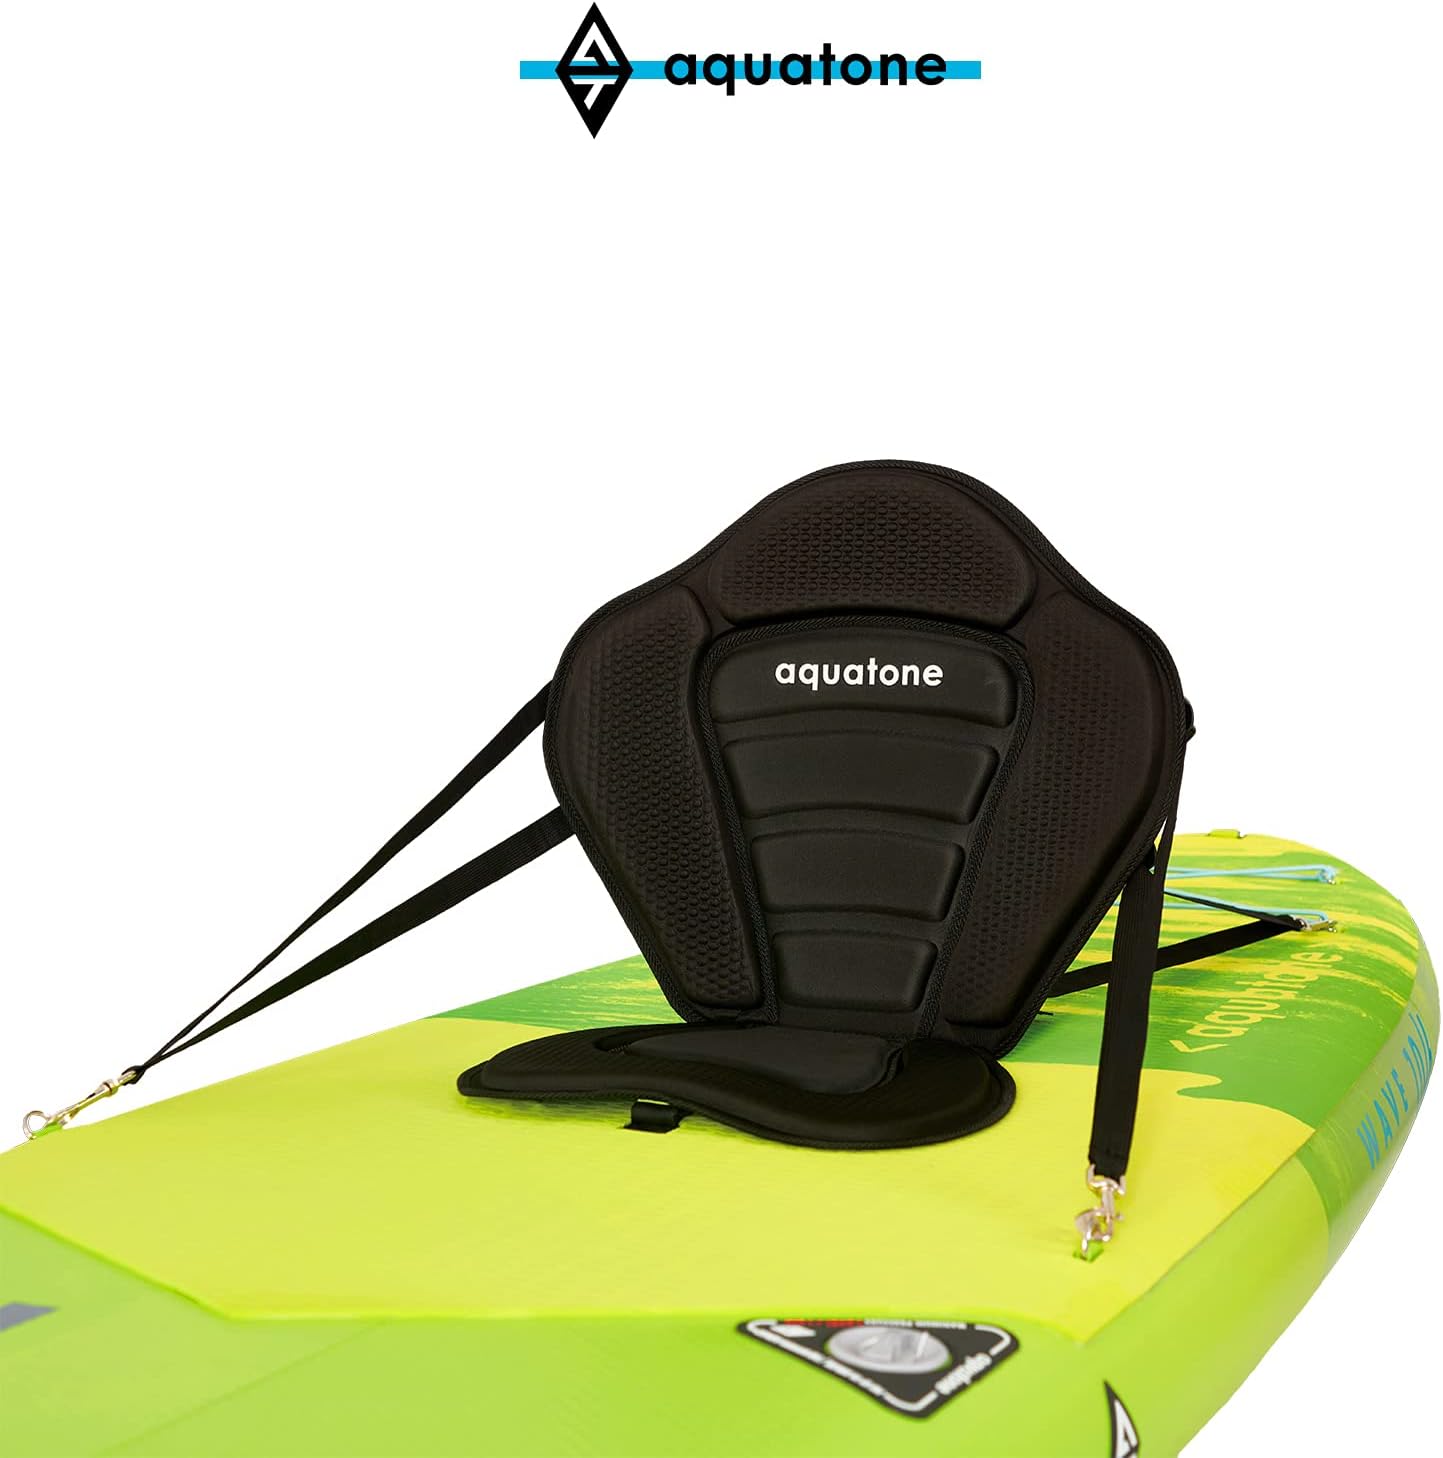 Aquatone Wave All-round 10'6 iSUP Paddleboard Package